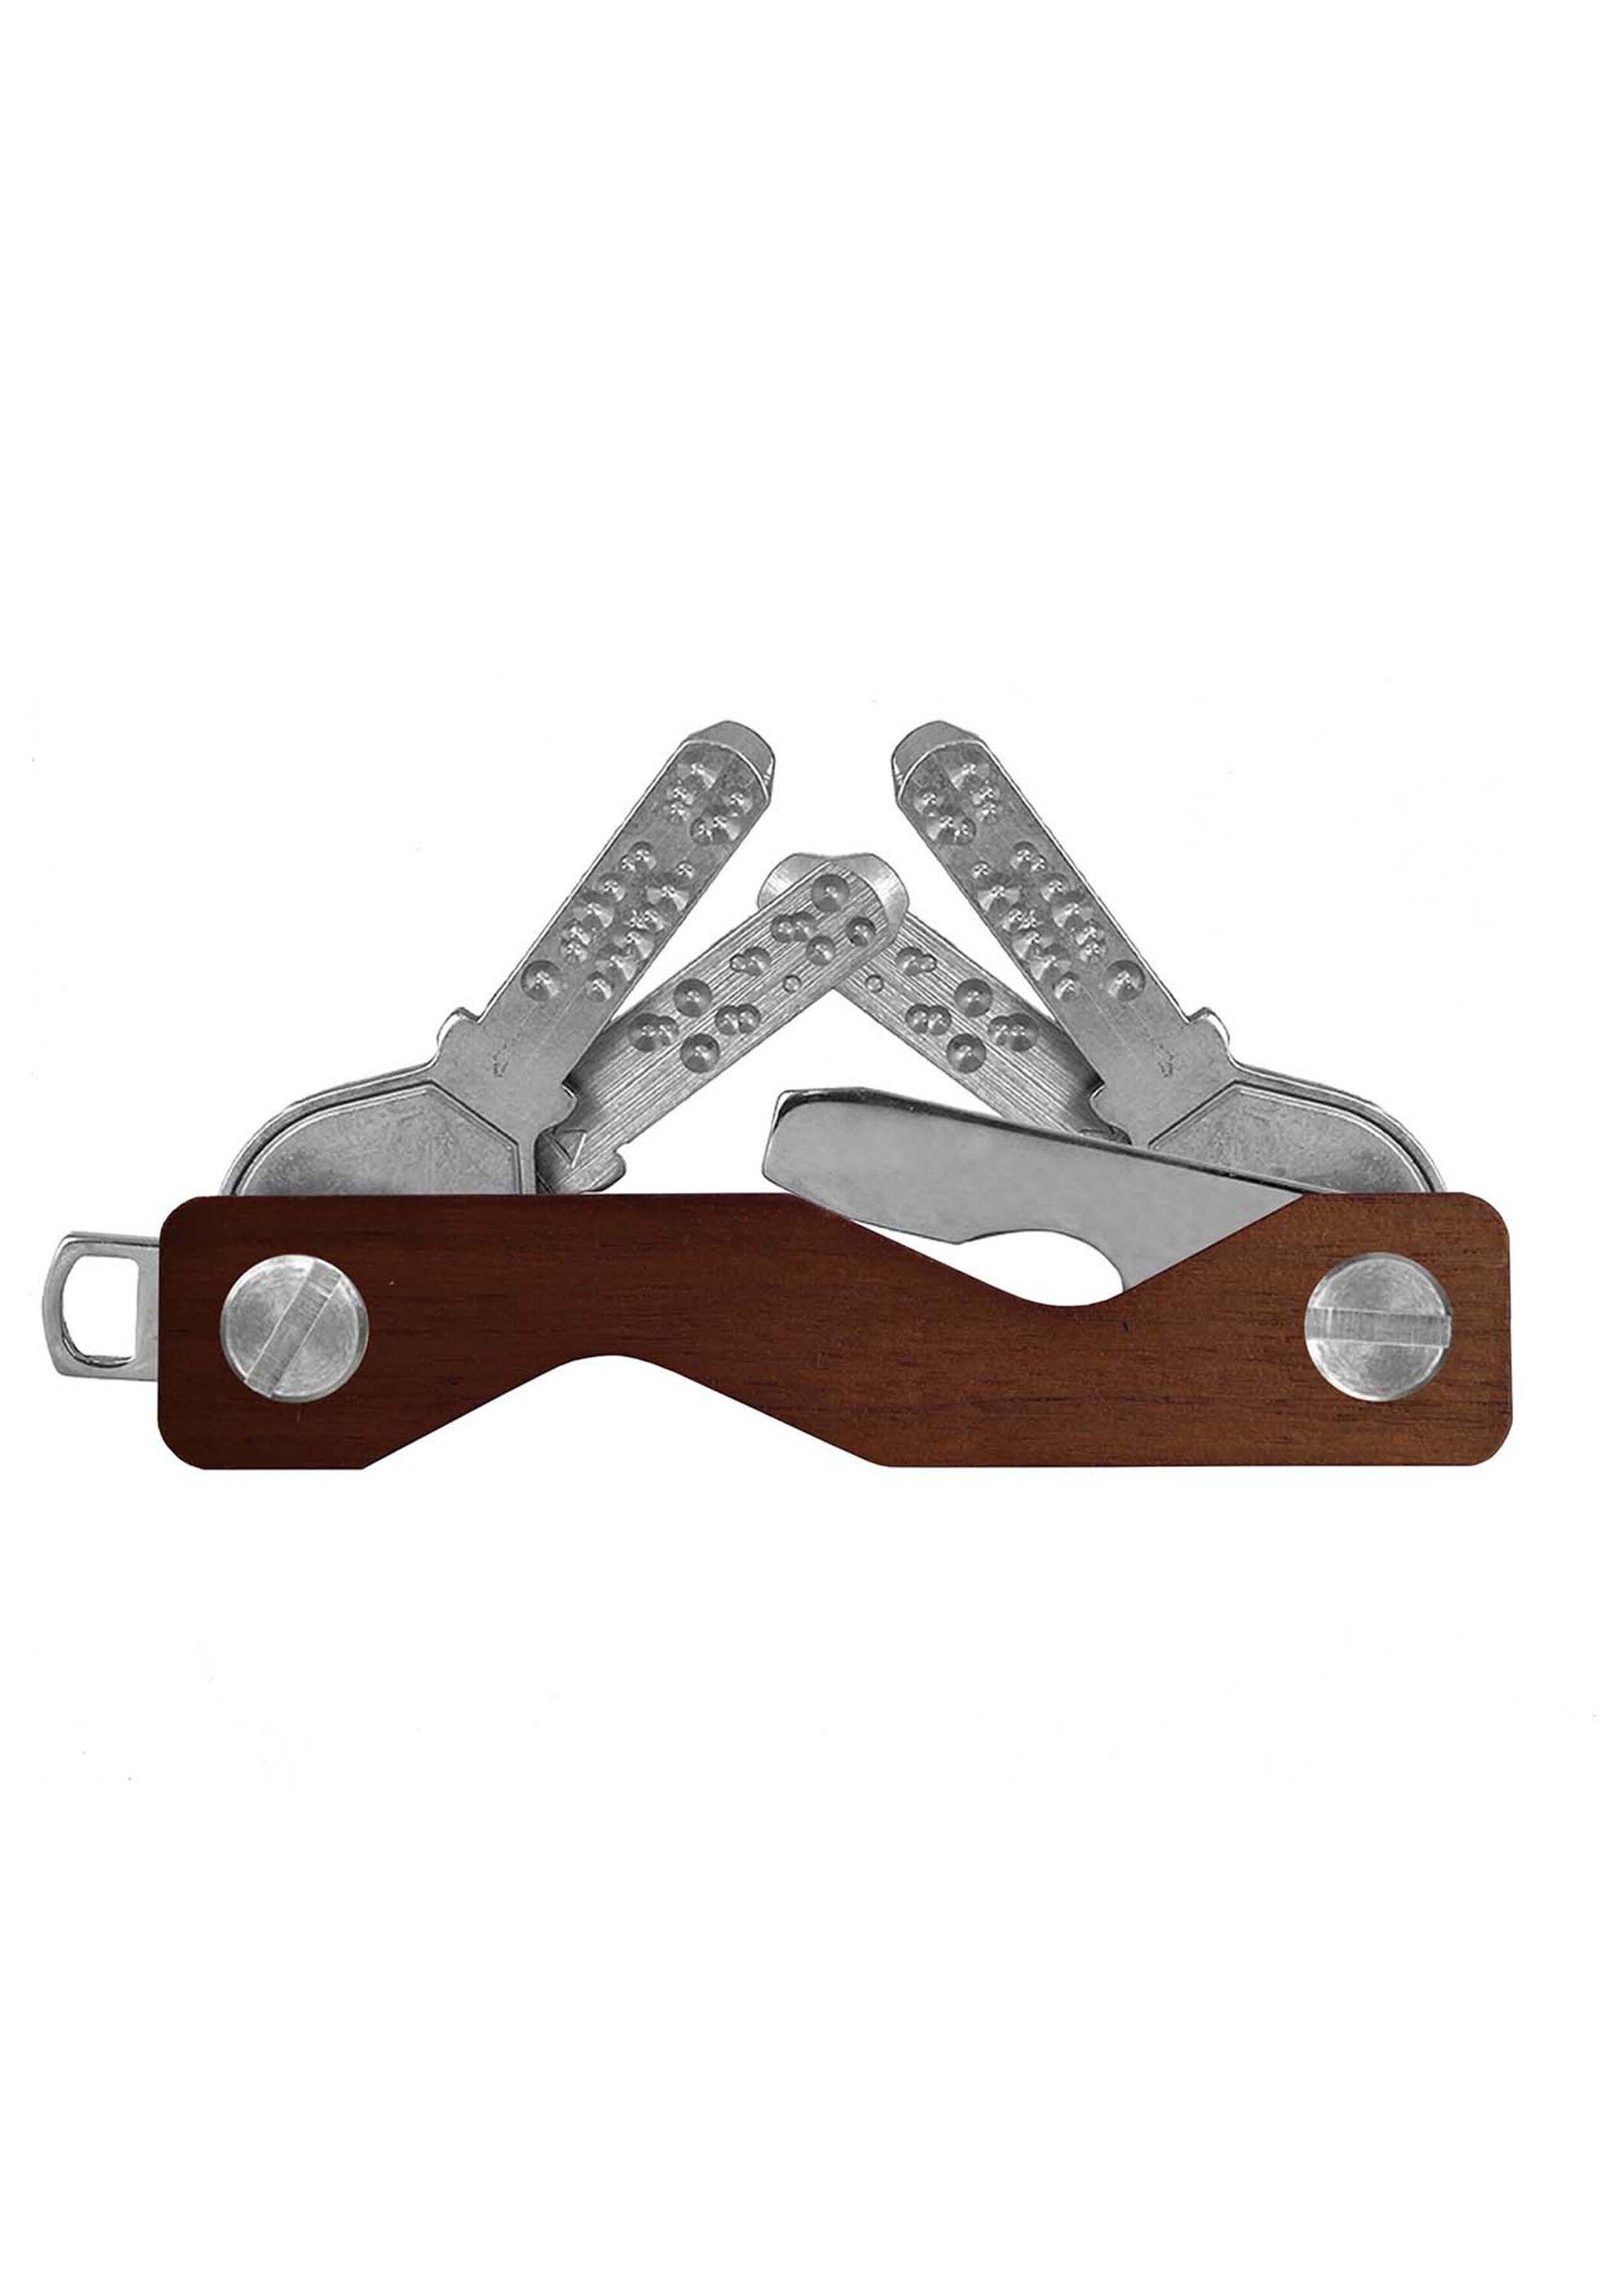 Schlüsselanhänger SWISS braun S3, keycabins Wood made